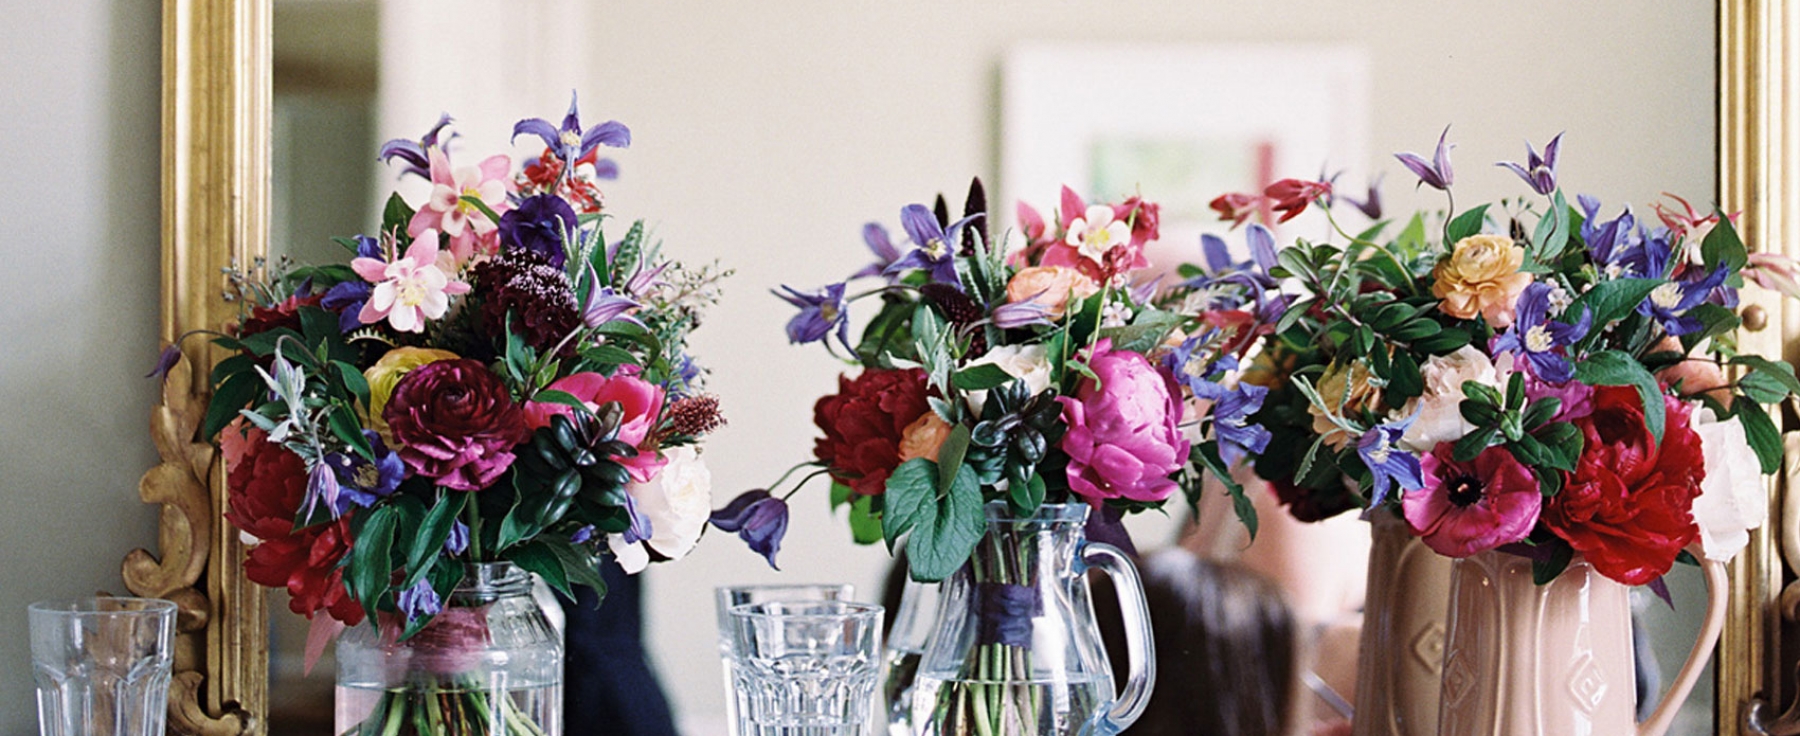 joanne-truby-wedding-florals-slide-9